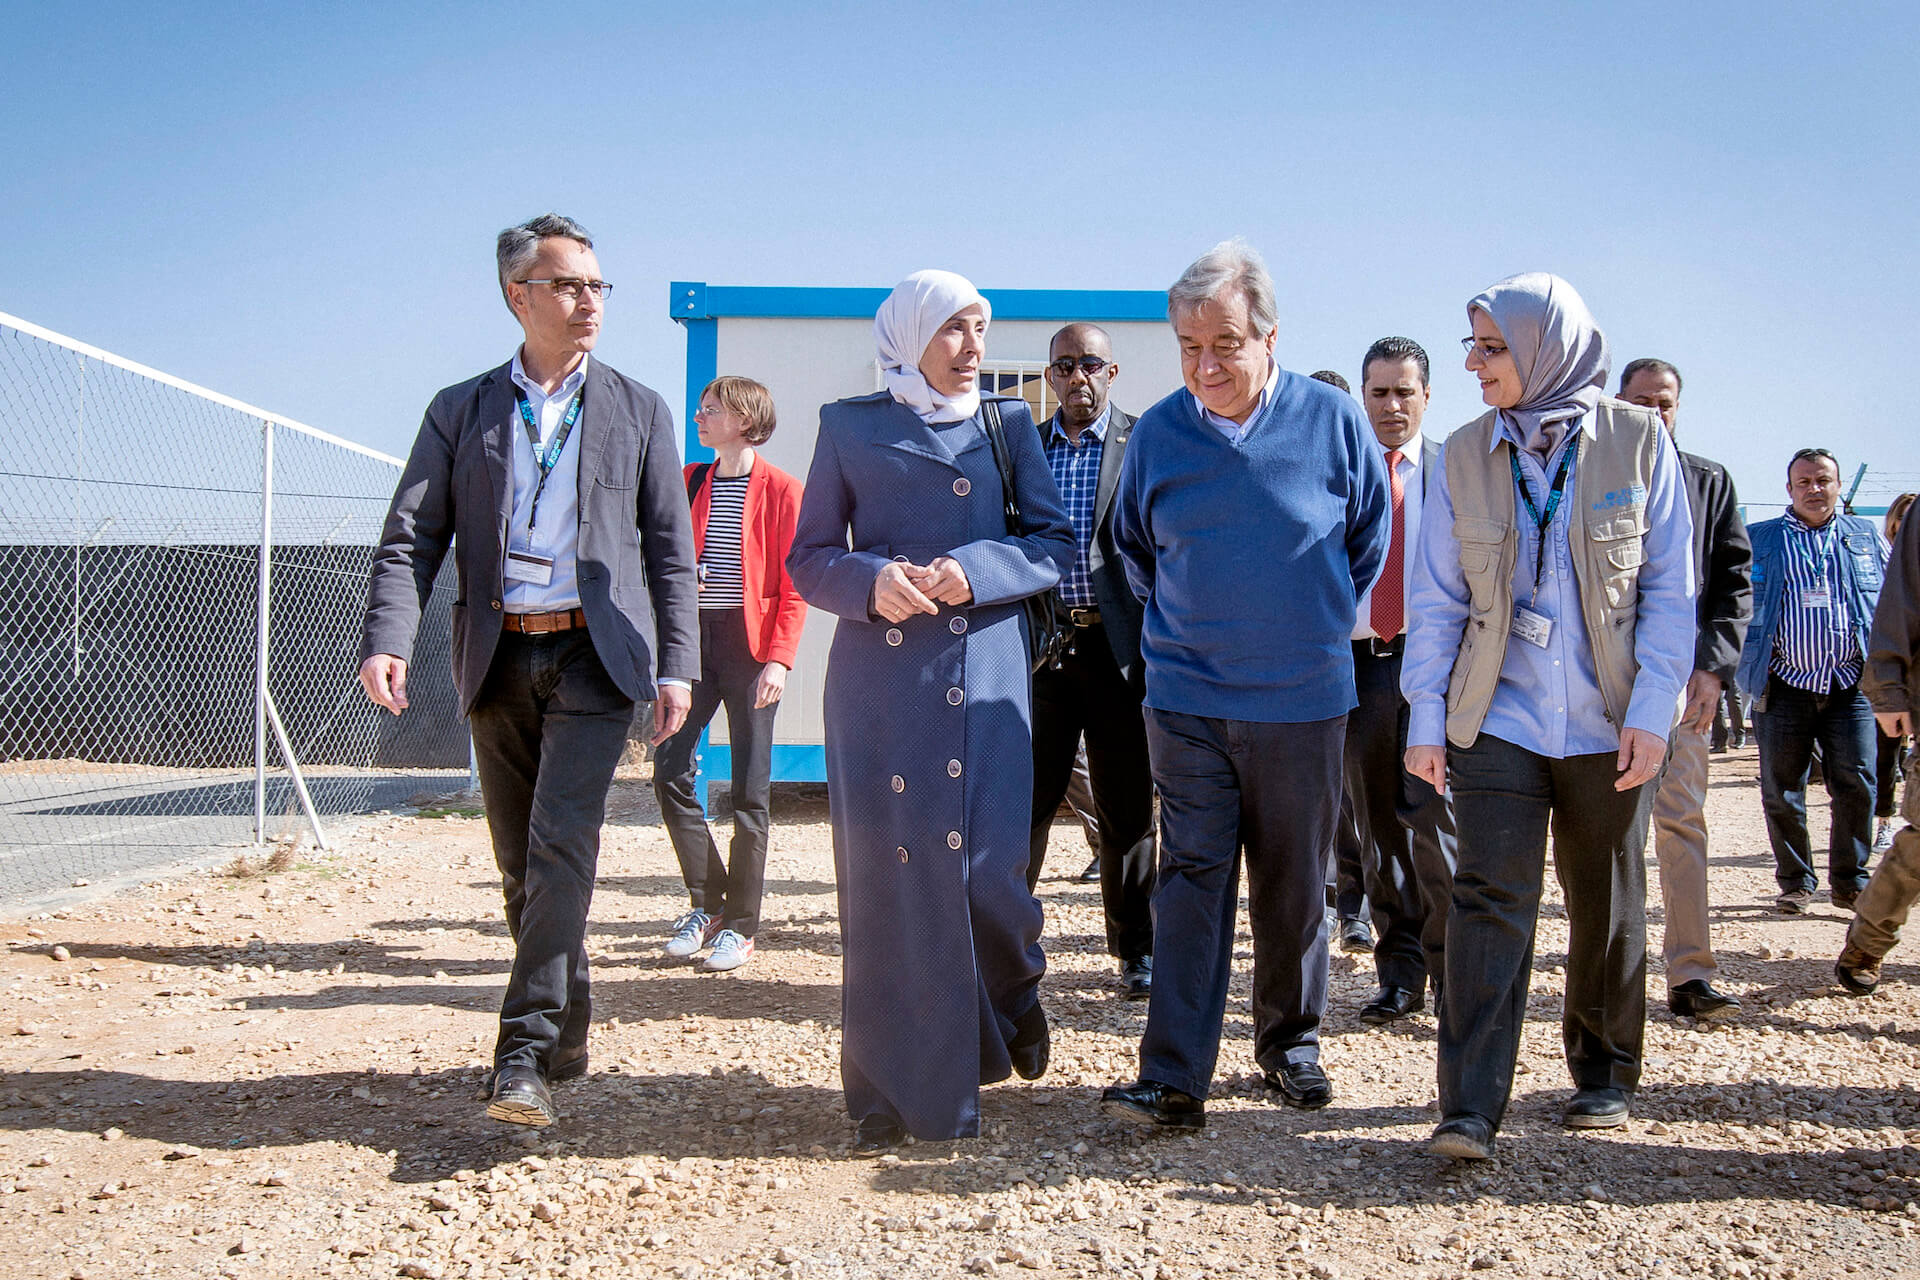 In March 2017, UN Secretary-General António Guterres visits the UN Women center in the Za’atari refugee camp in Jordan to interact with Syrian refugee women and girls residing in Jordan. Photo: UN Women/Benoît Almeras